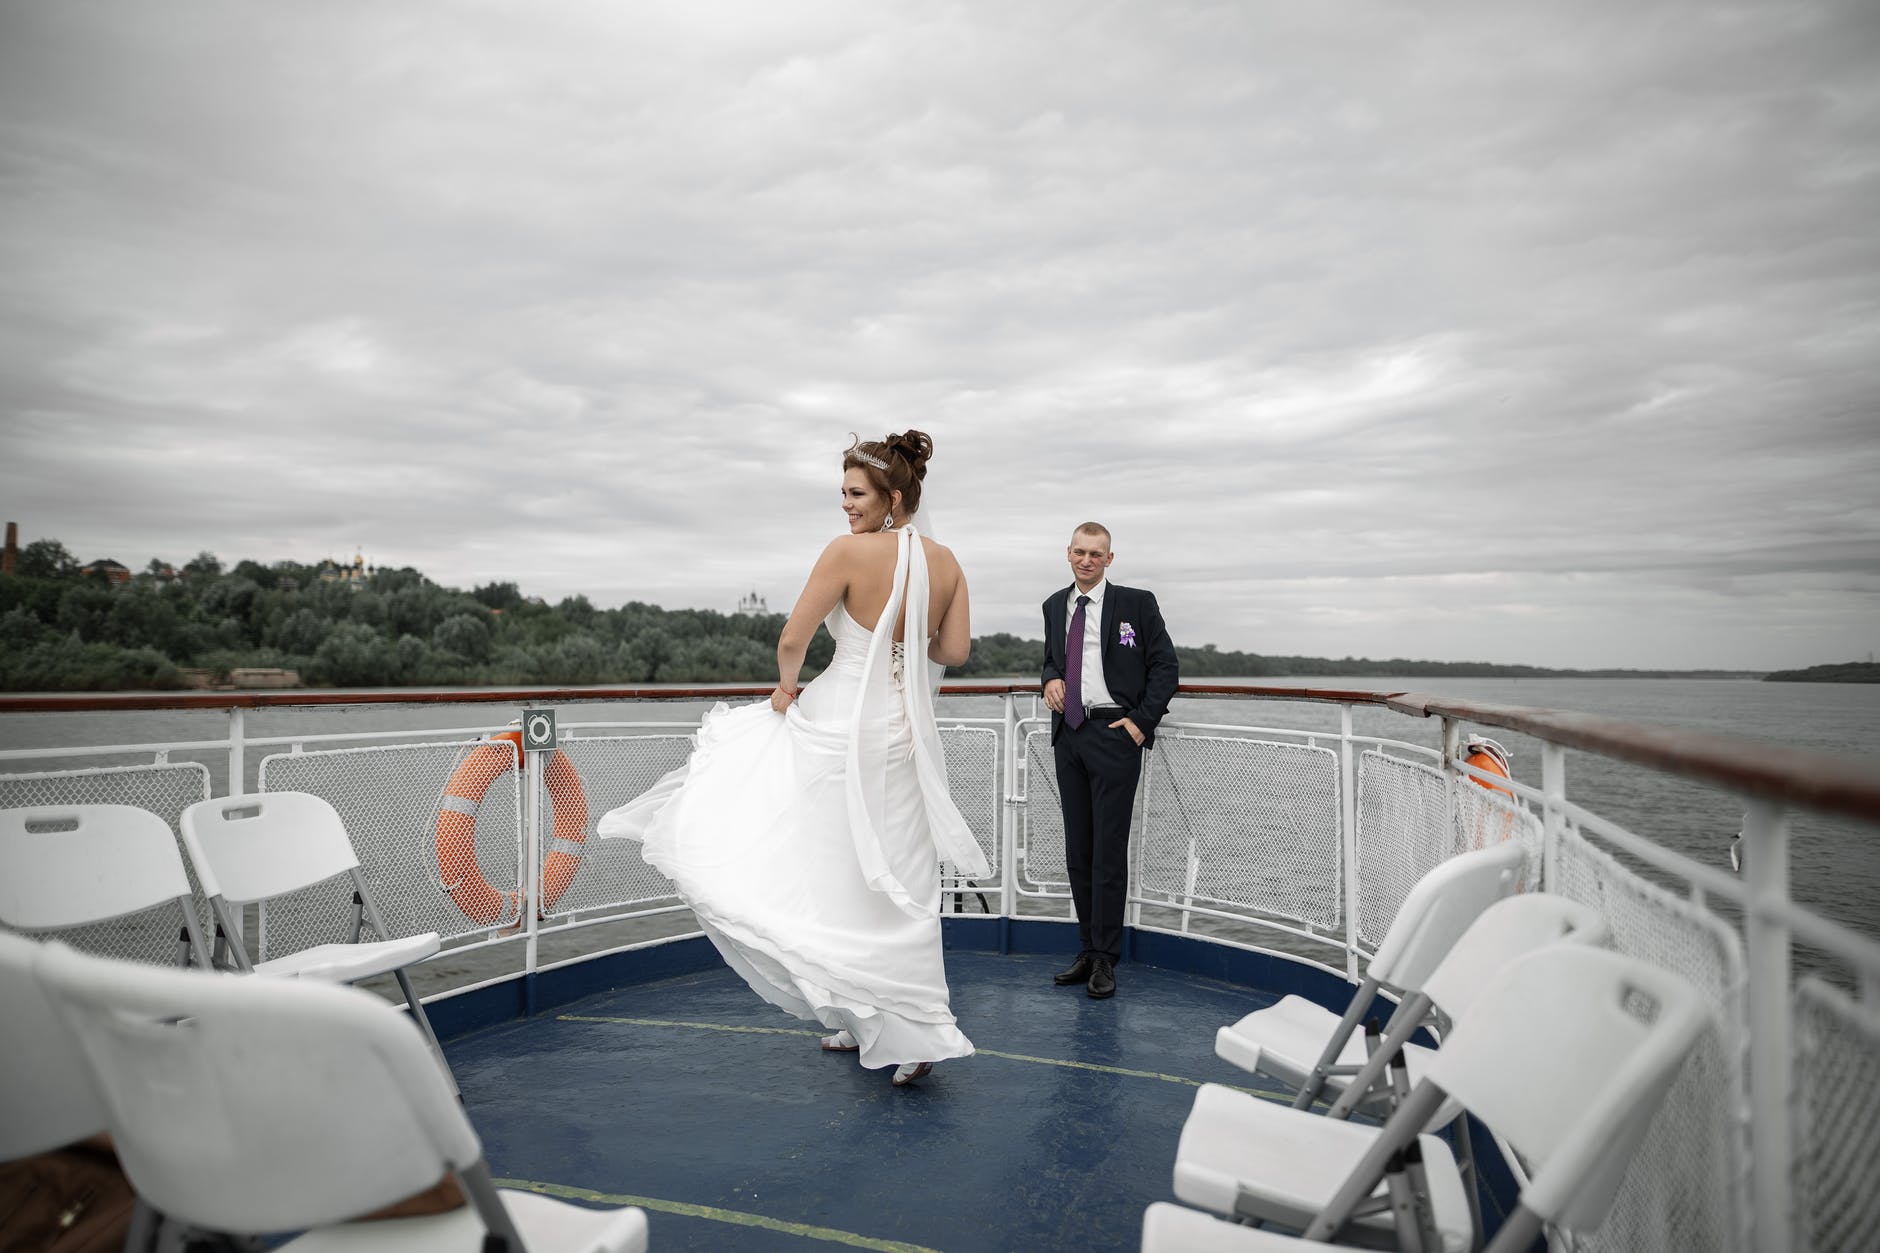 Couple enjoying their wedding boat ride | Photo: Pexels